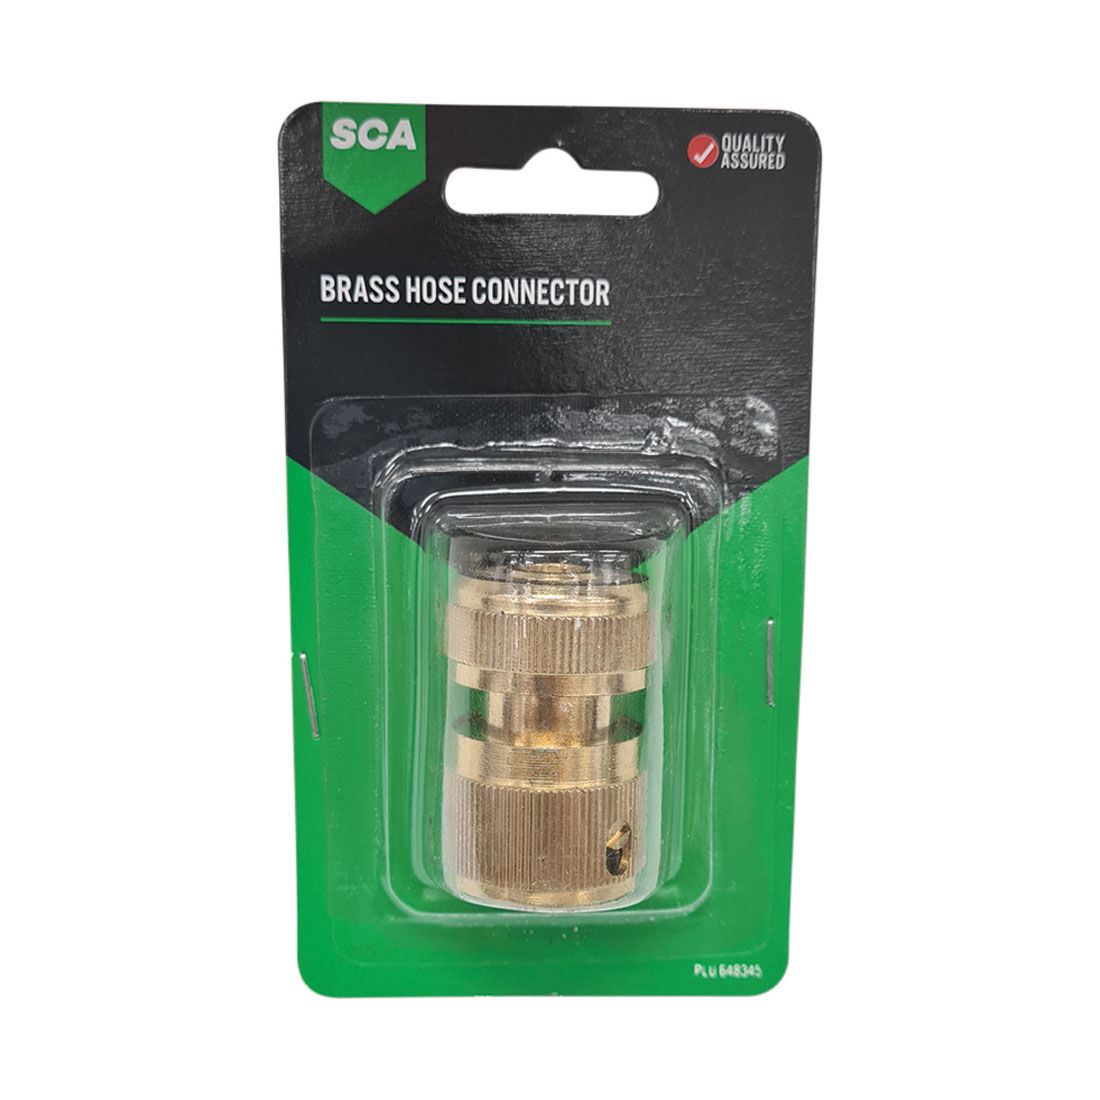 SCA Garden Hose Brass Connector - 12mm, , scaau_hi-res